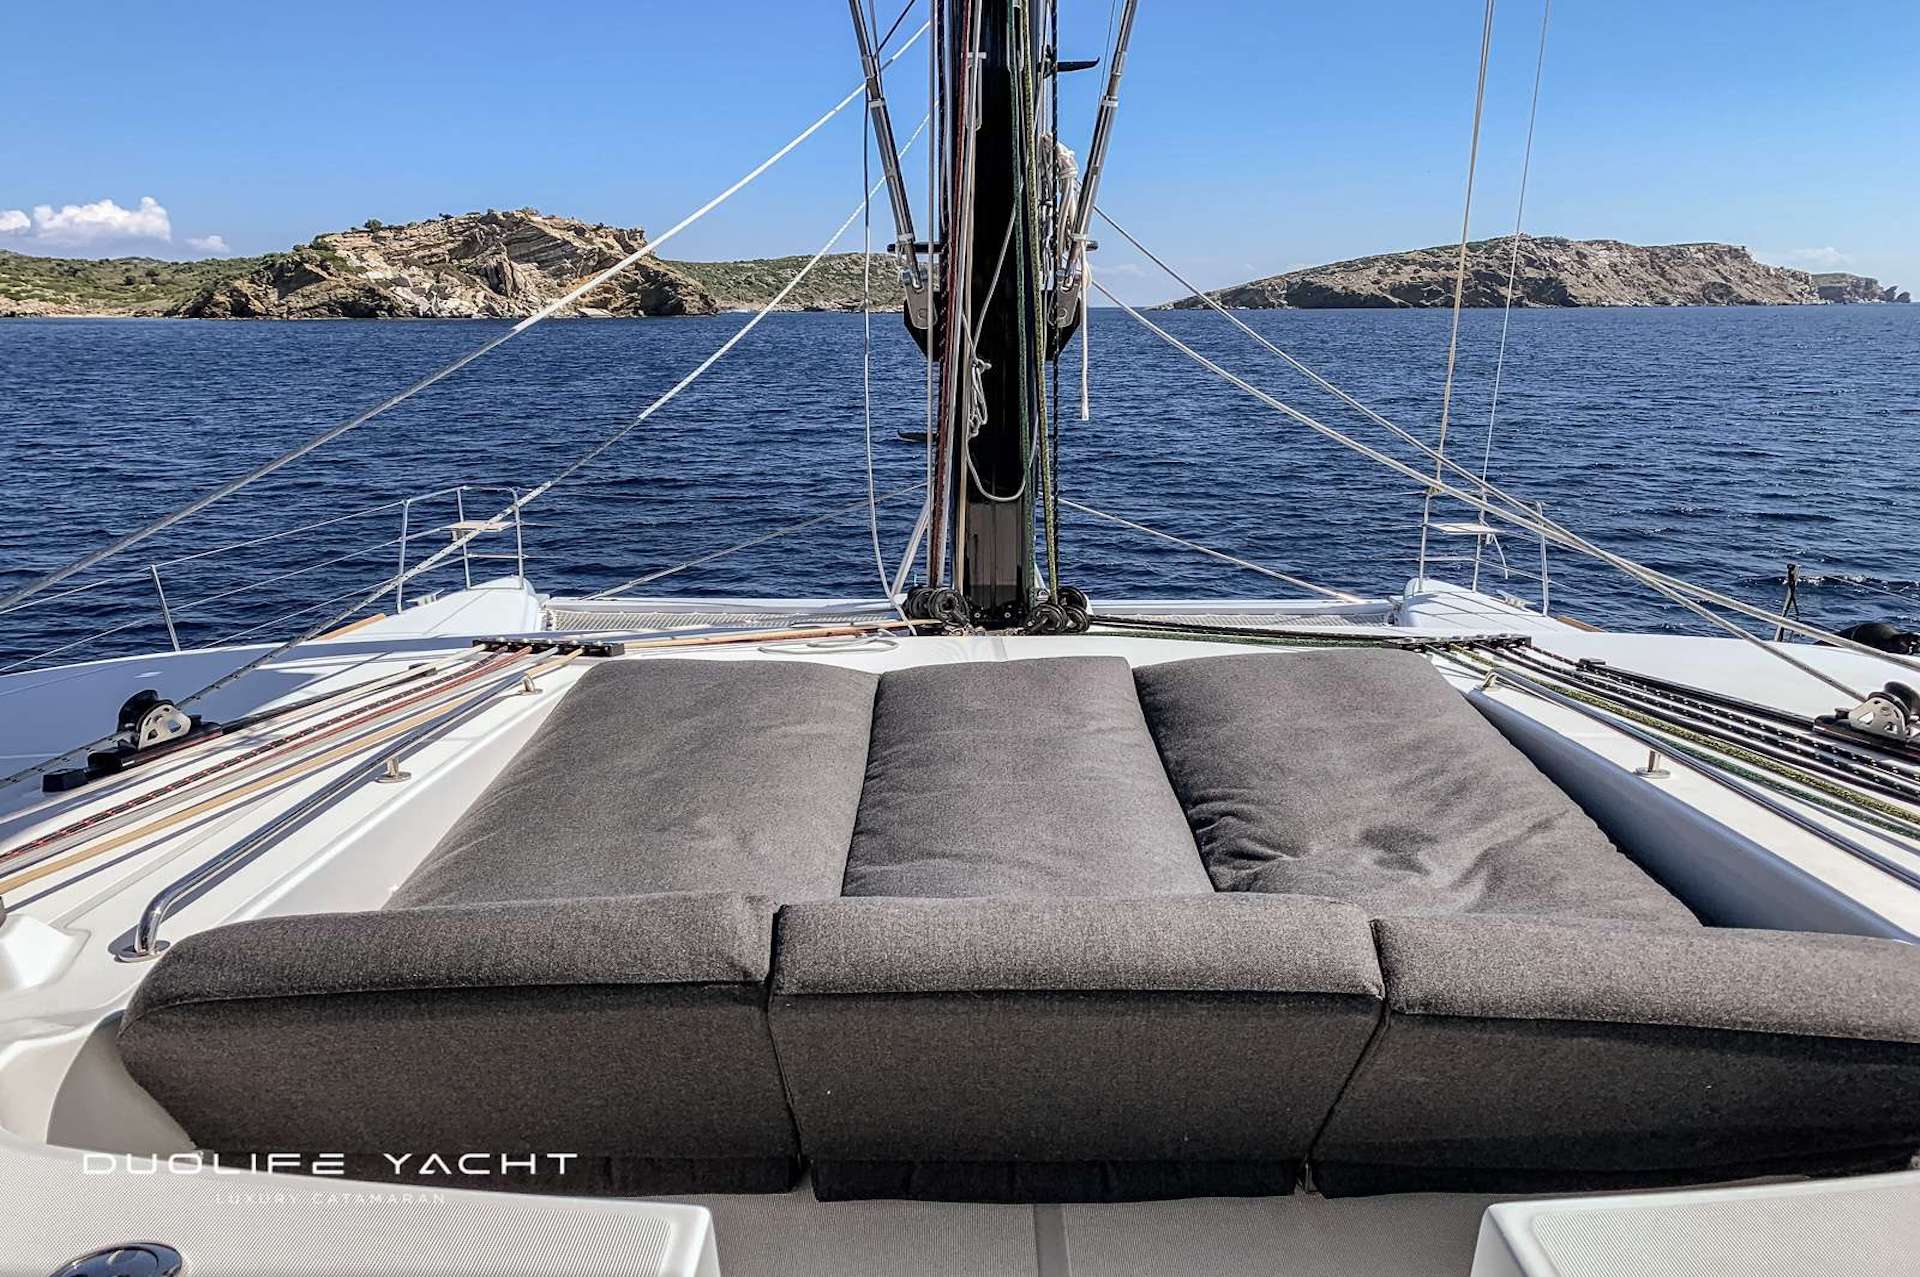 yacht charter Duolife sundeck